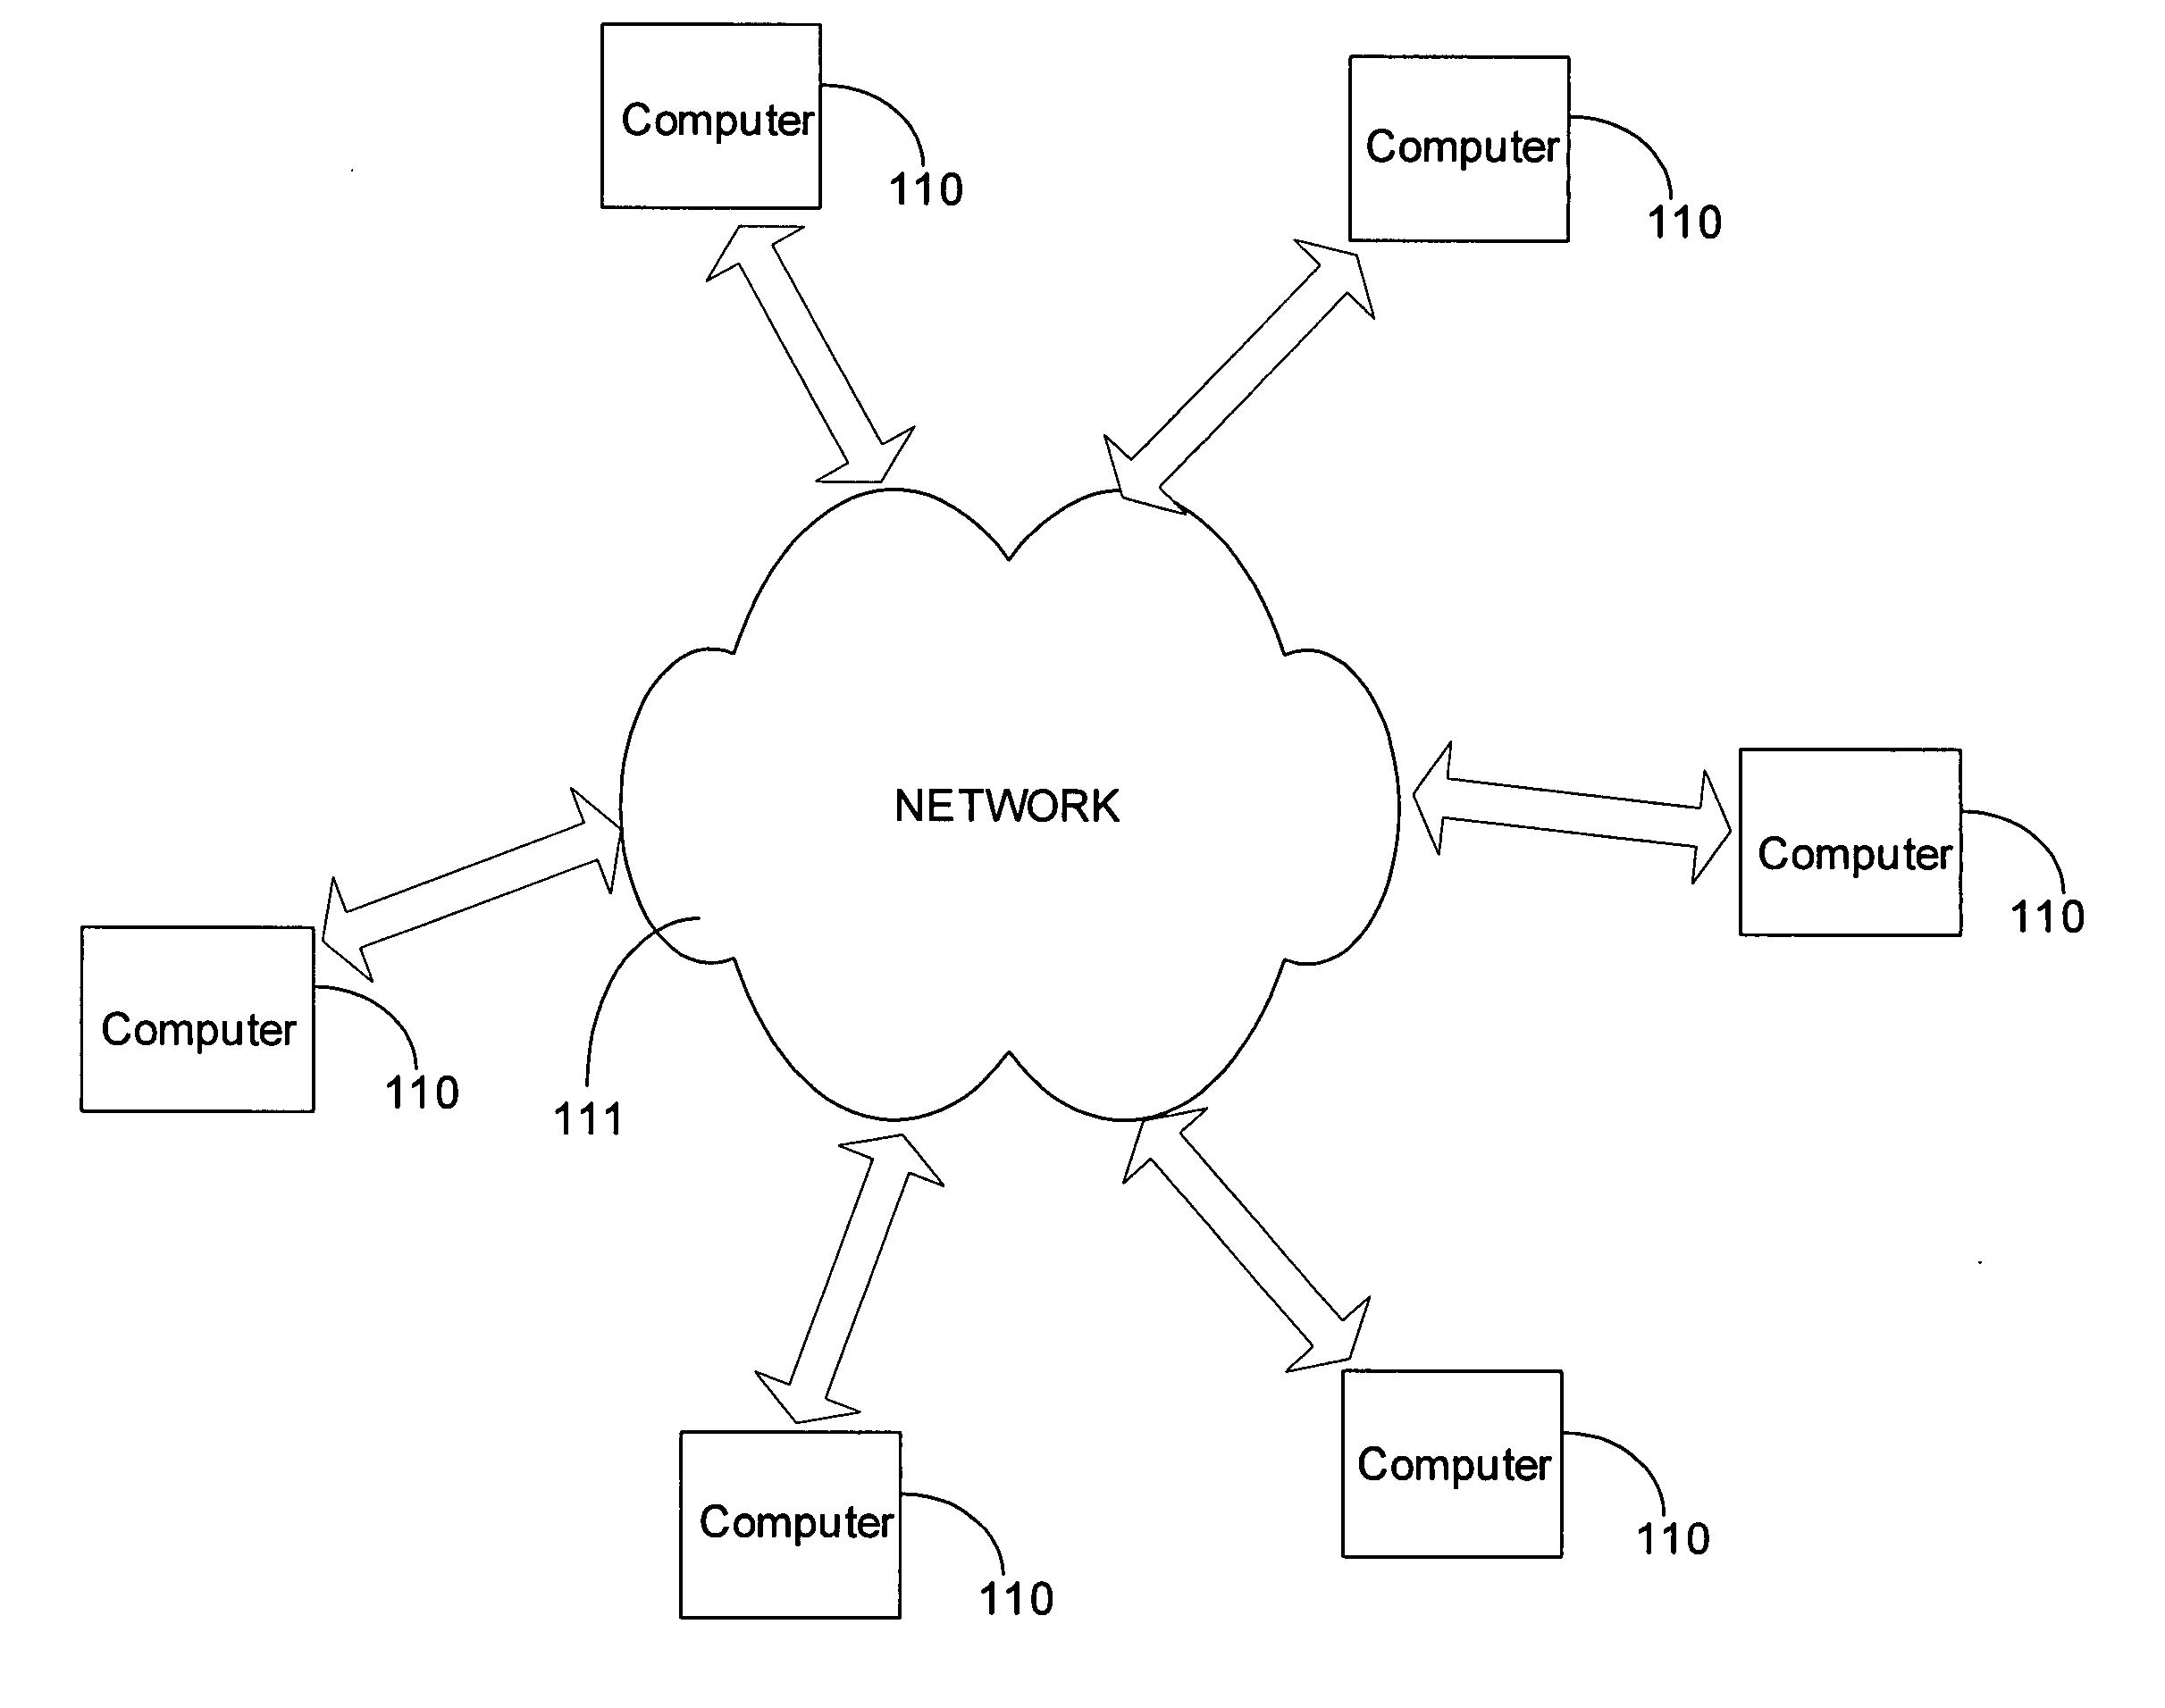 System and methods for providing network quarantine using IPsec